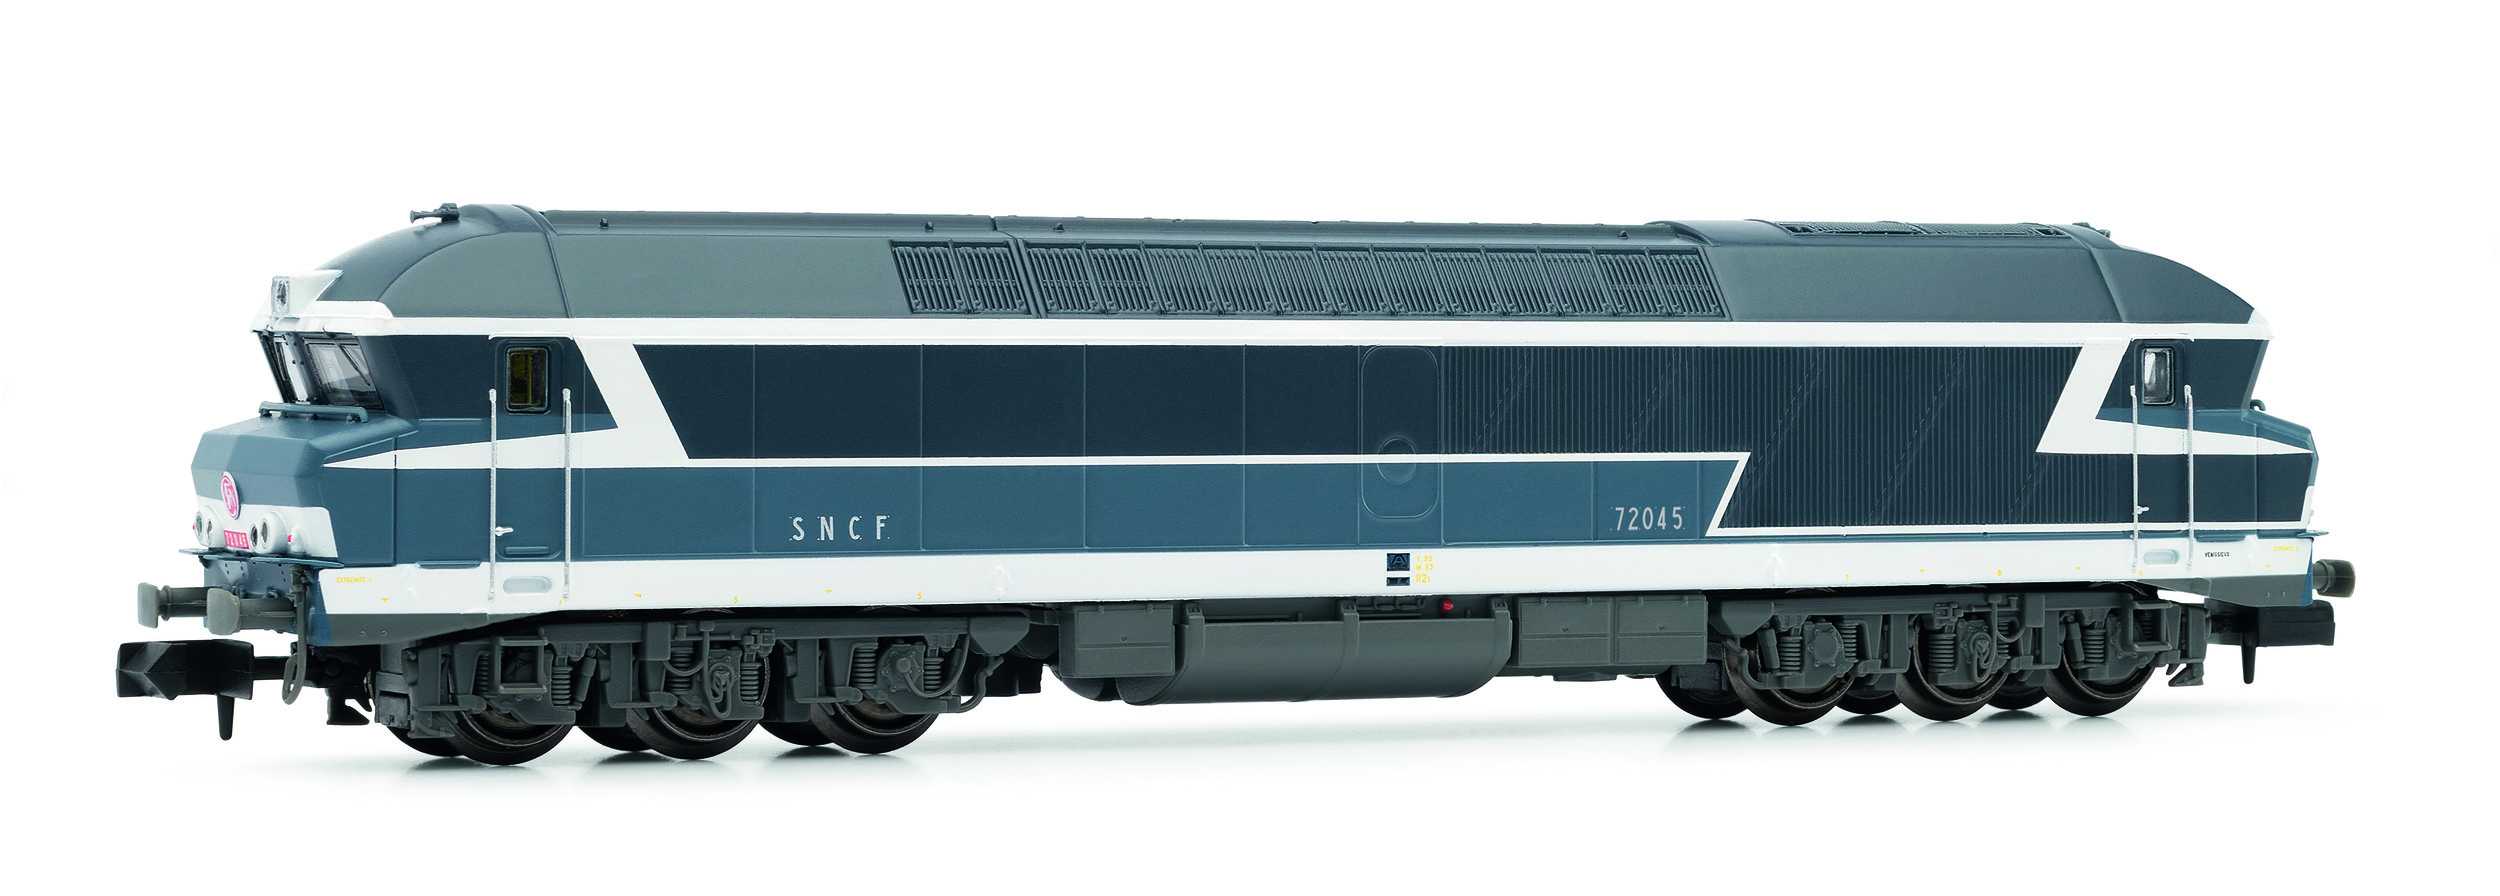 Trains miniatures : locomotives et autorail - Locomotive diesel CC7200